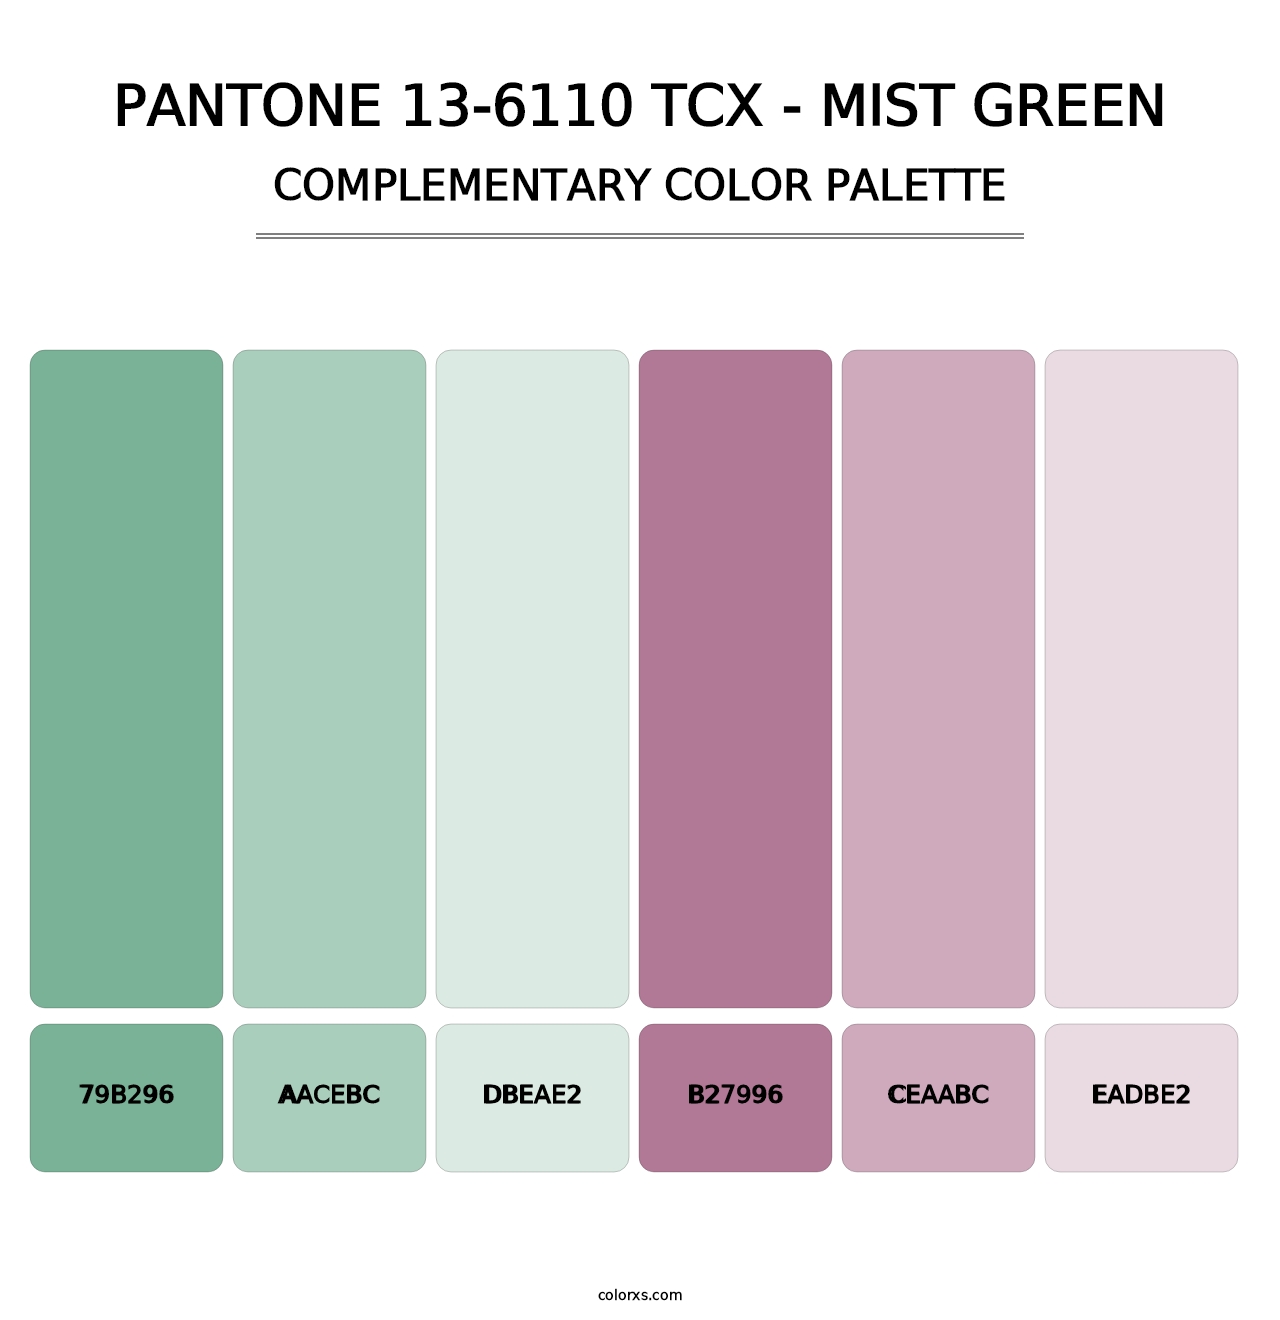 PANTONE 13-6110 TCX - Mist Green - Complementary Color Palette